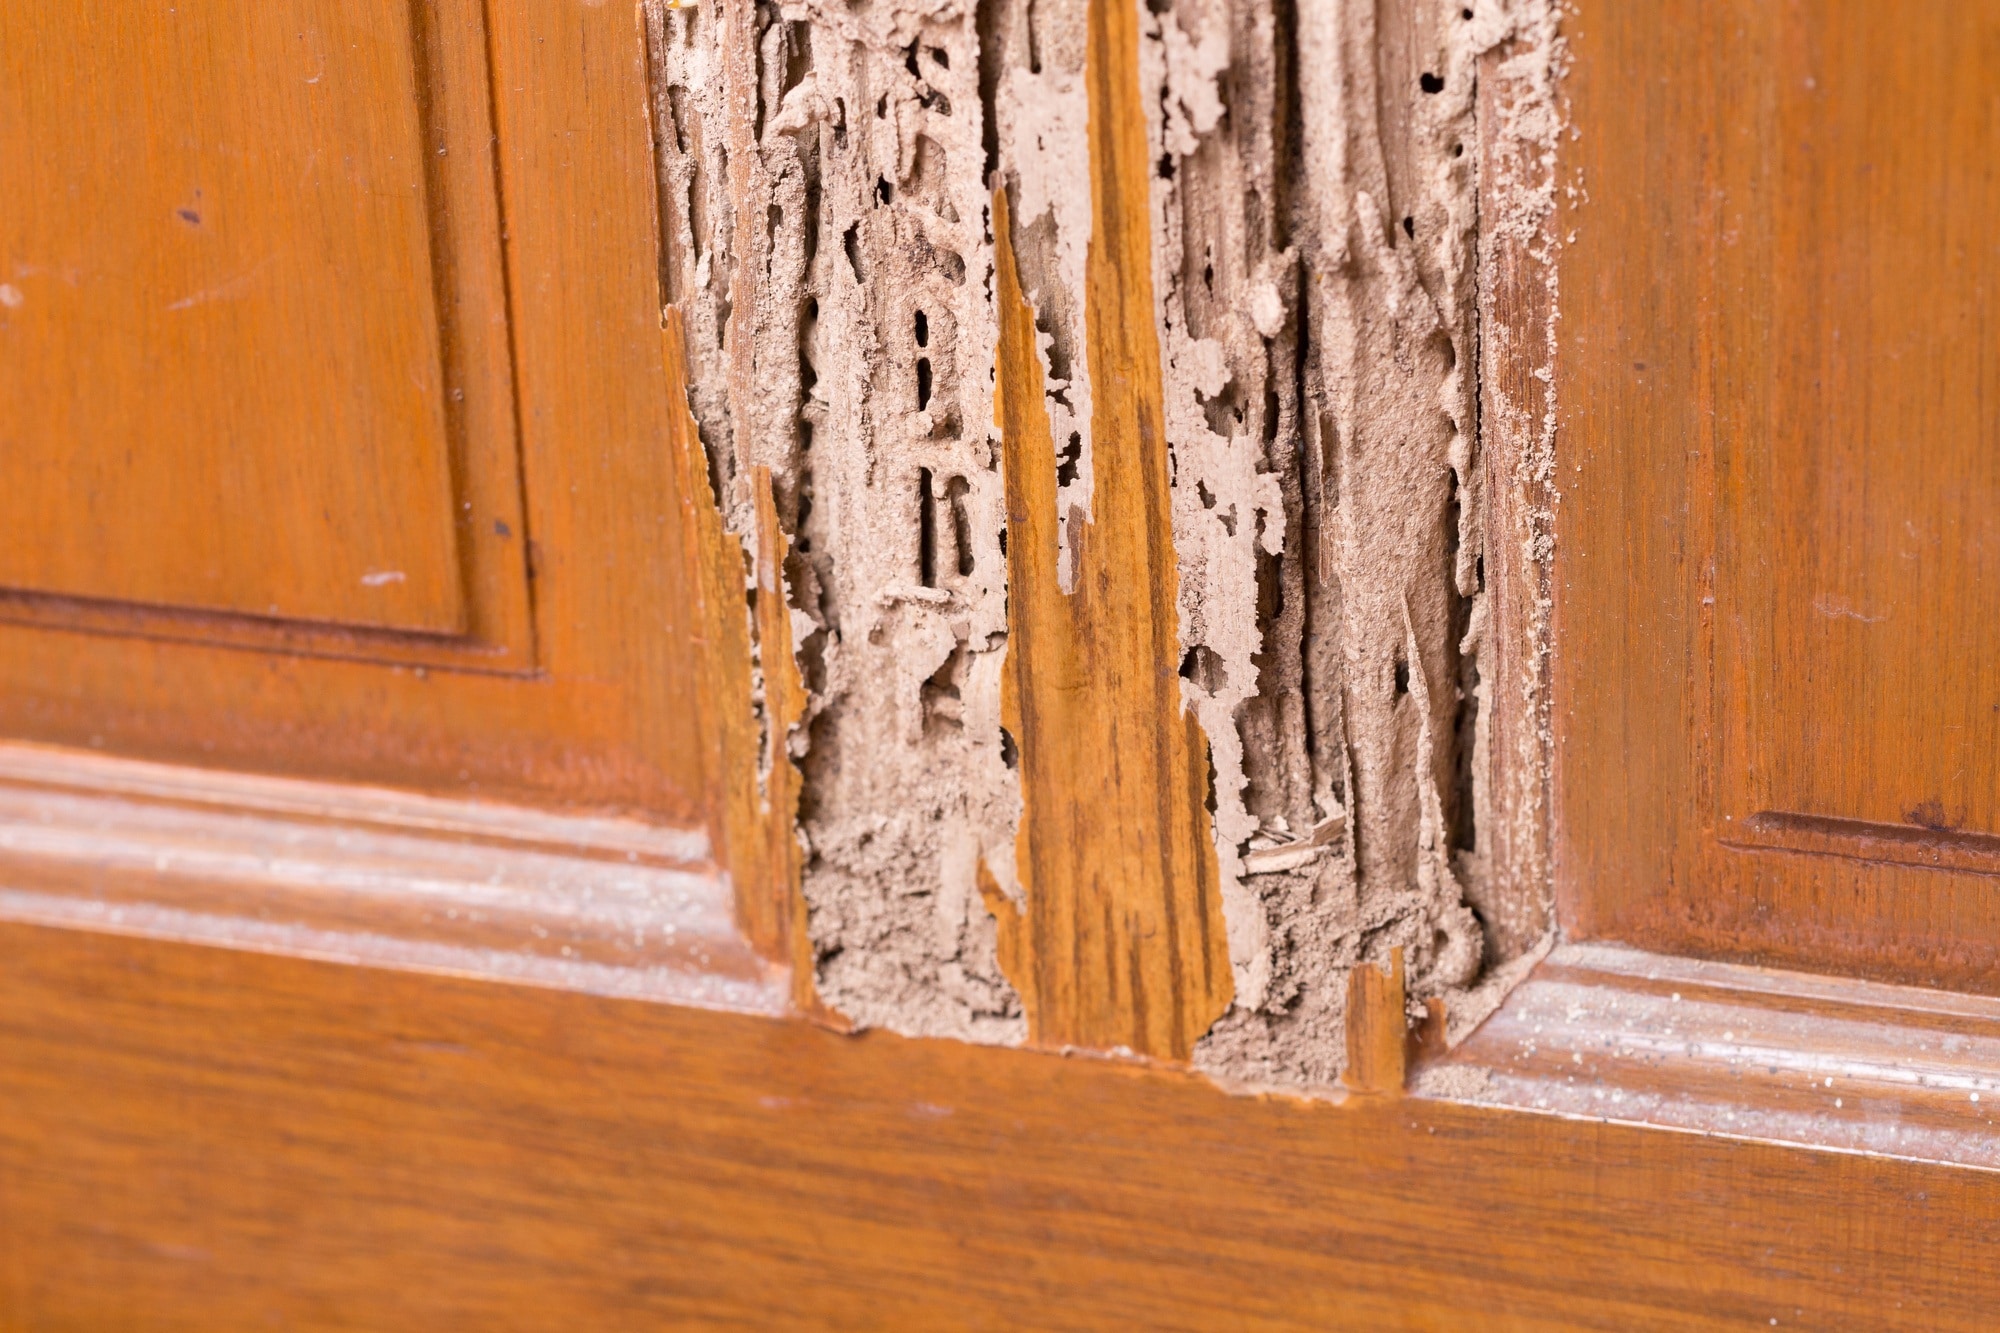 Repairing Termite Damage: Just How Difficult Is It?